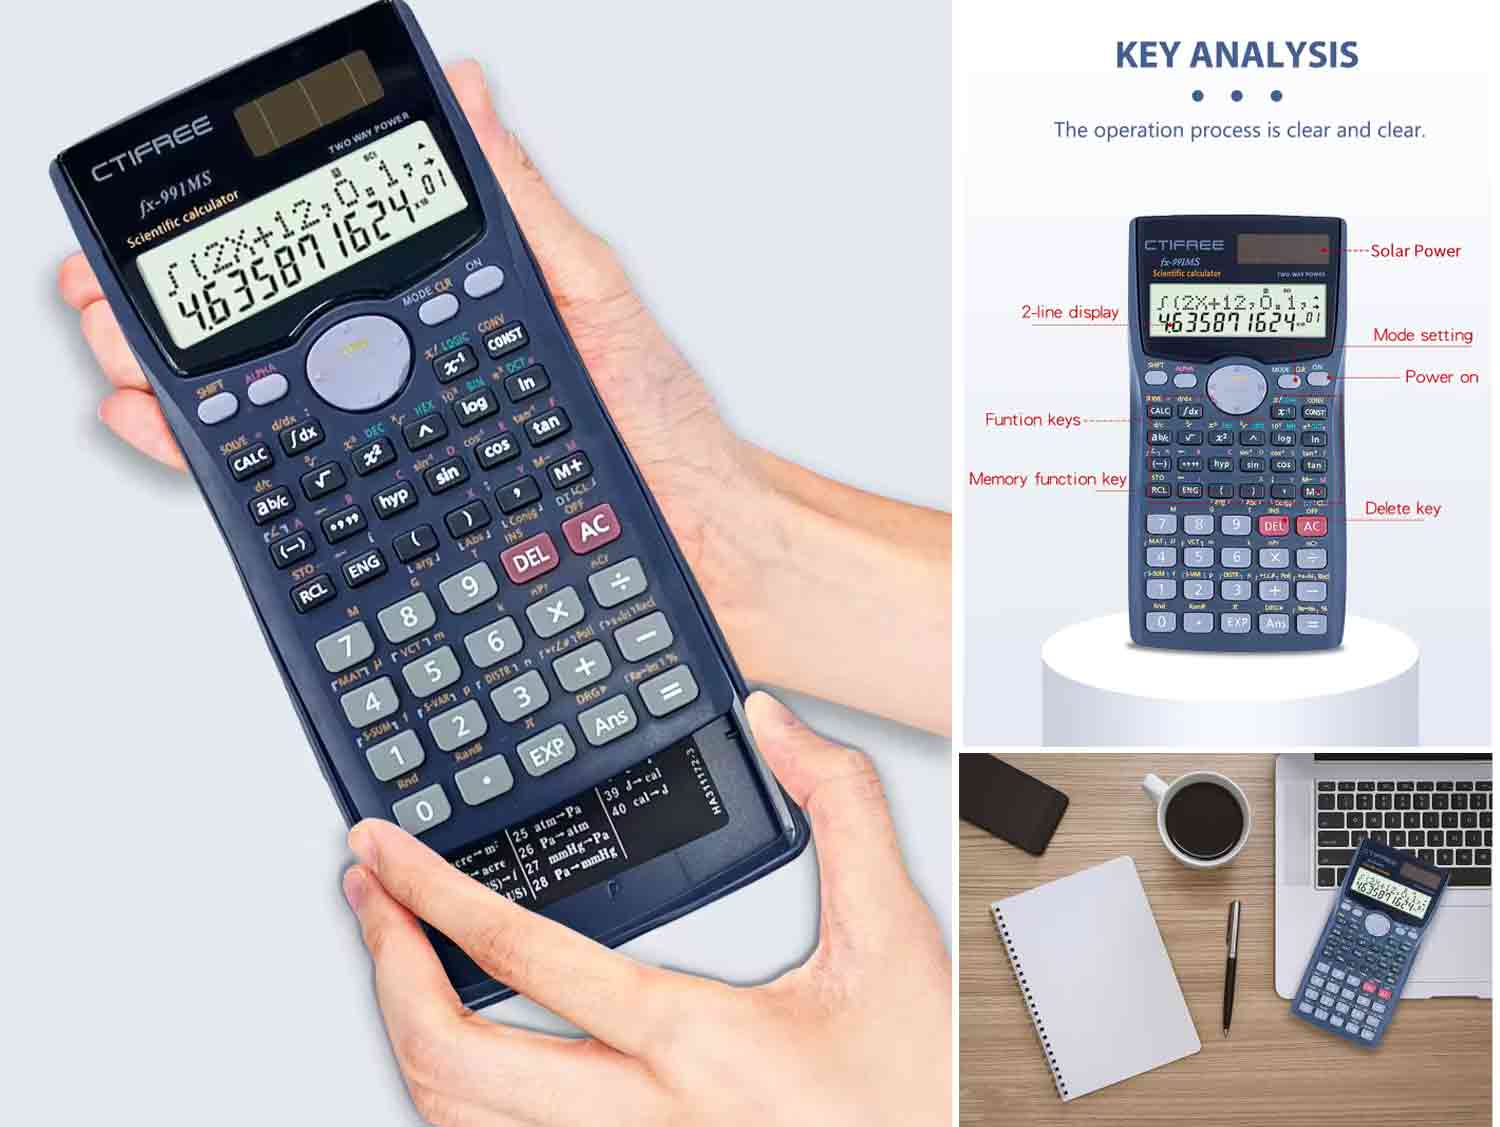 Standard Scientific Calculators fx-991MS